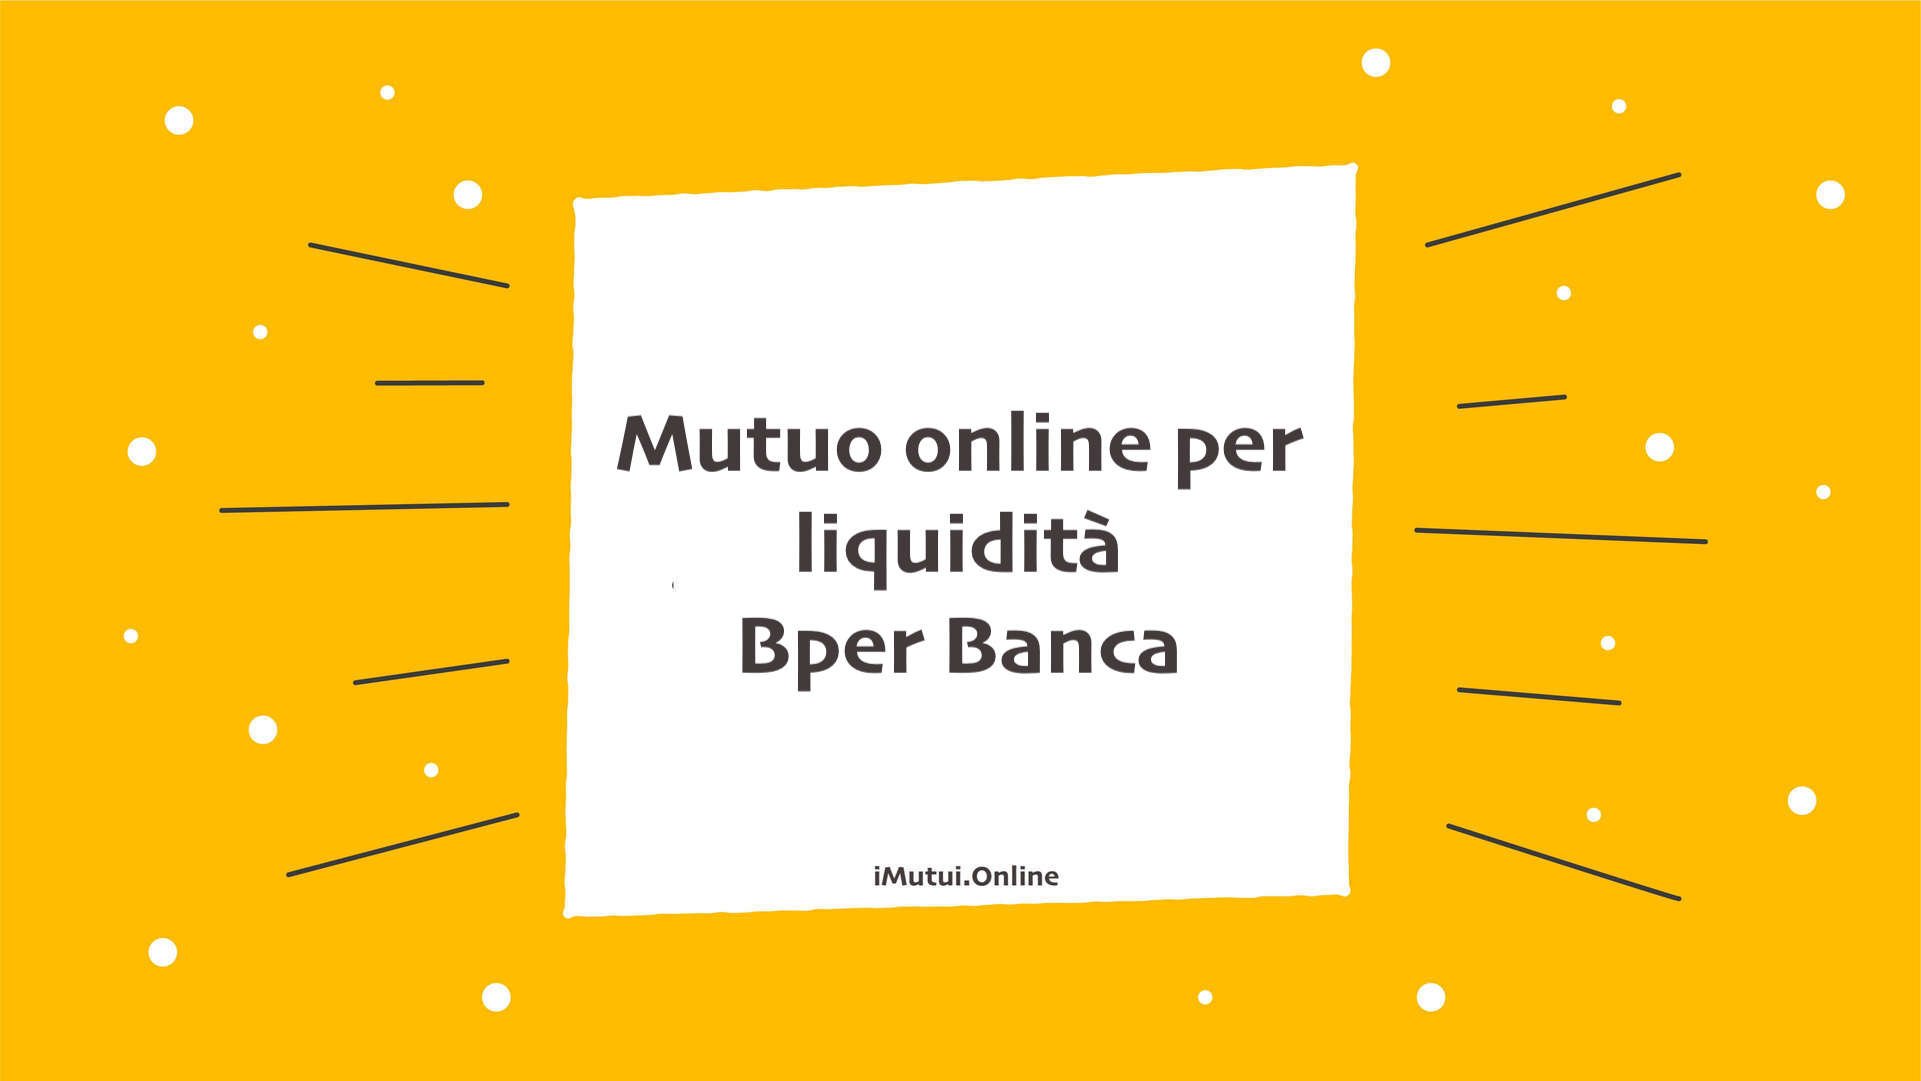 Mutuo online per liquidità 
Bper Banca